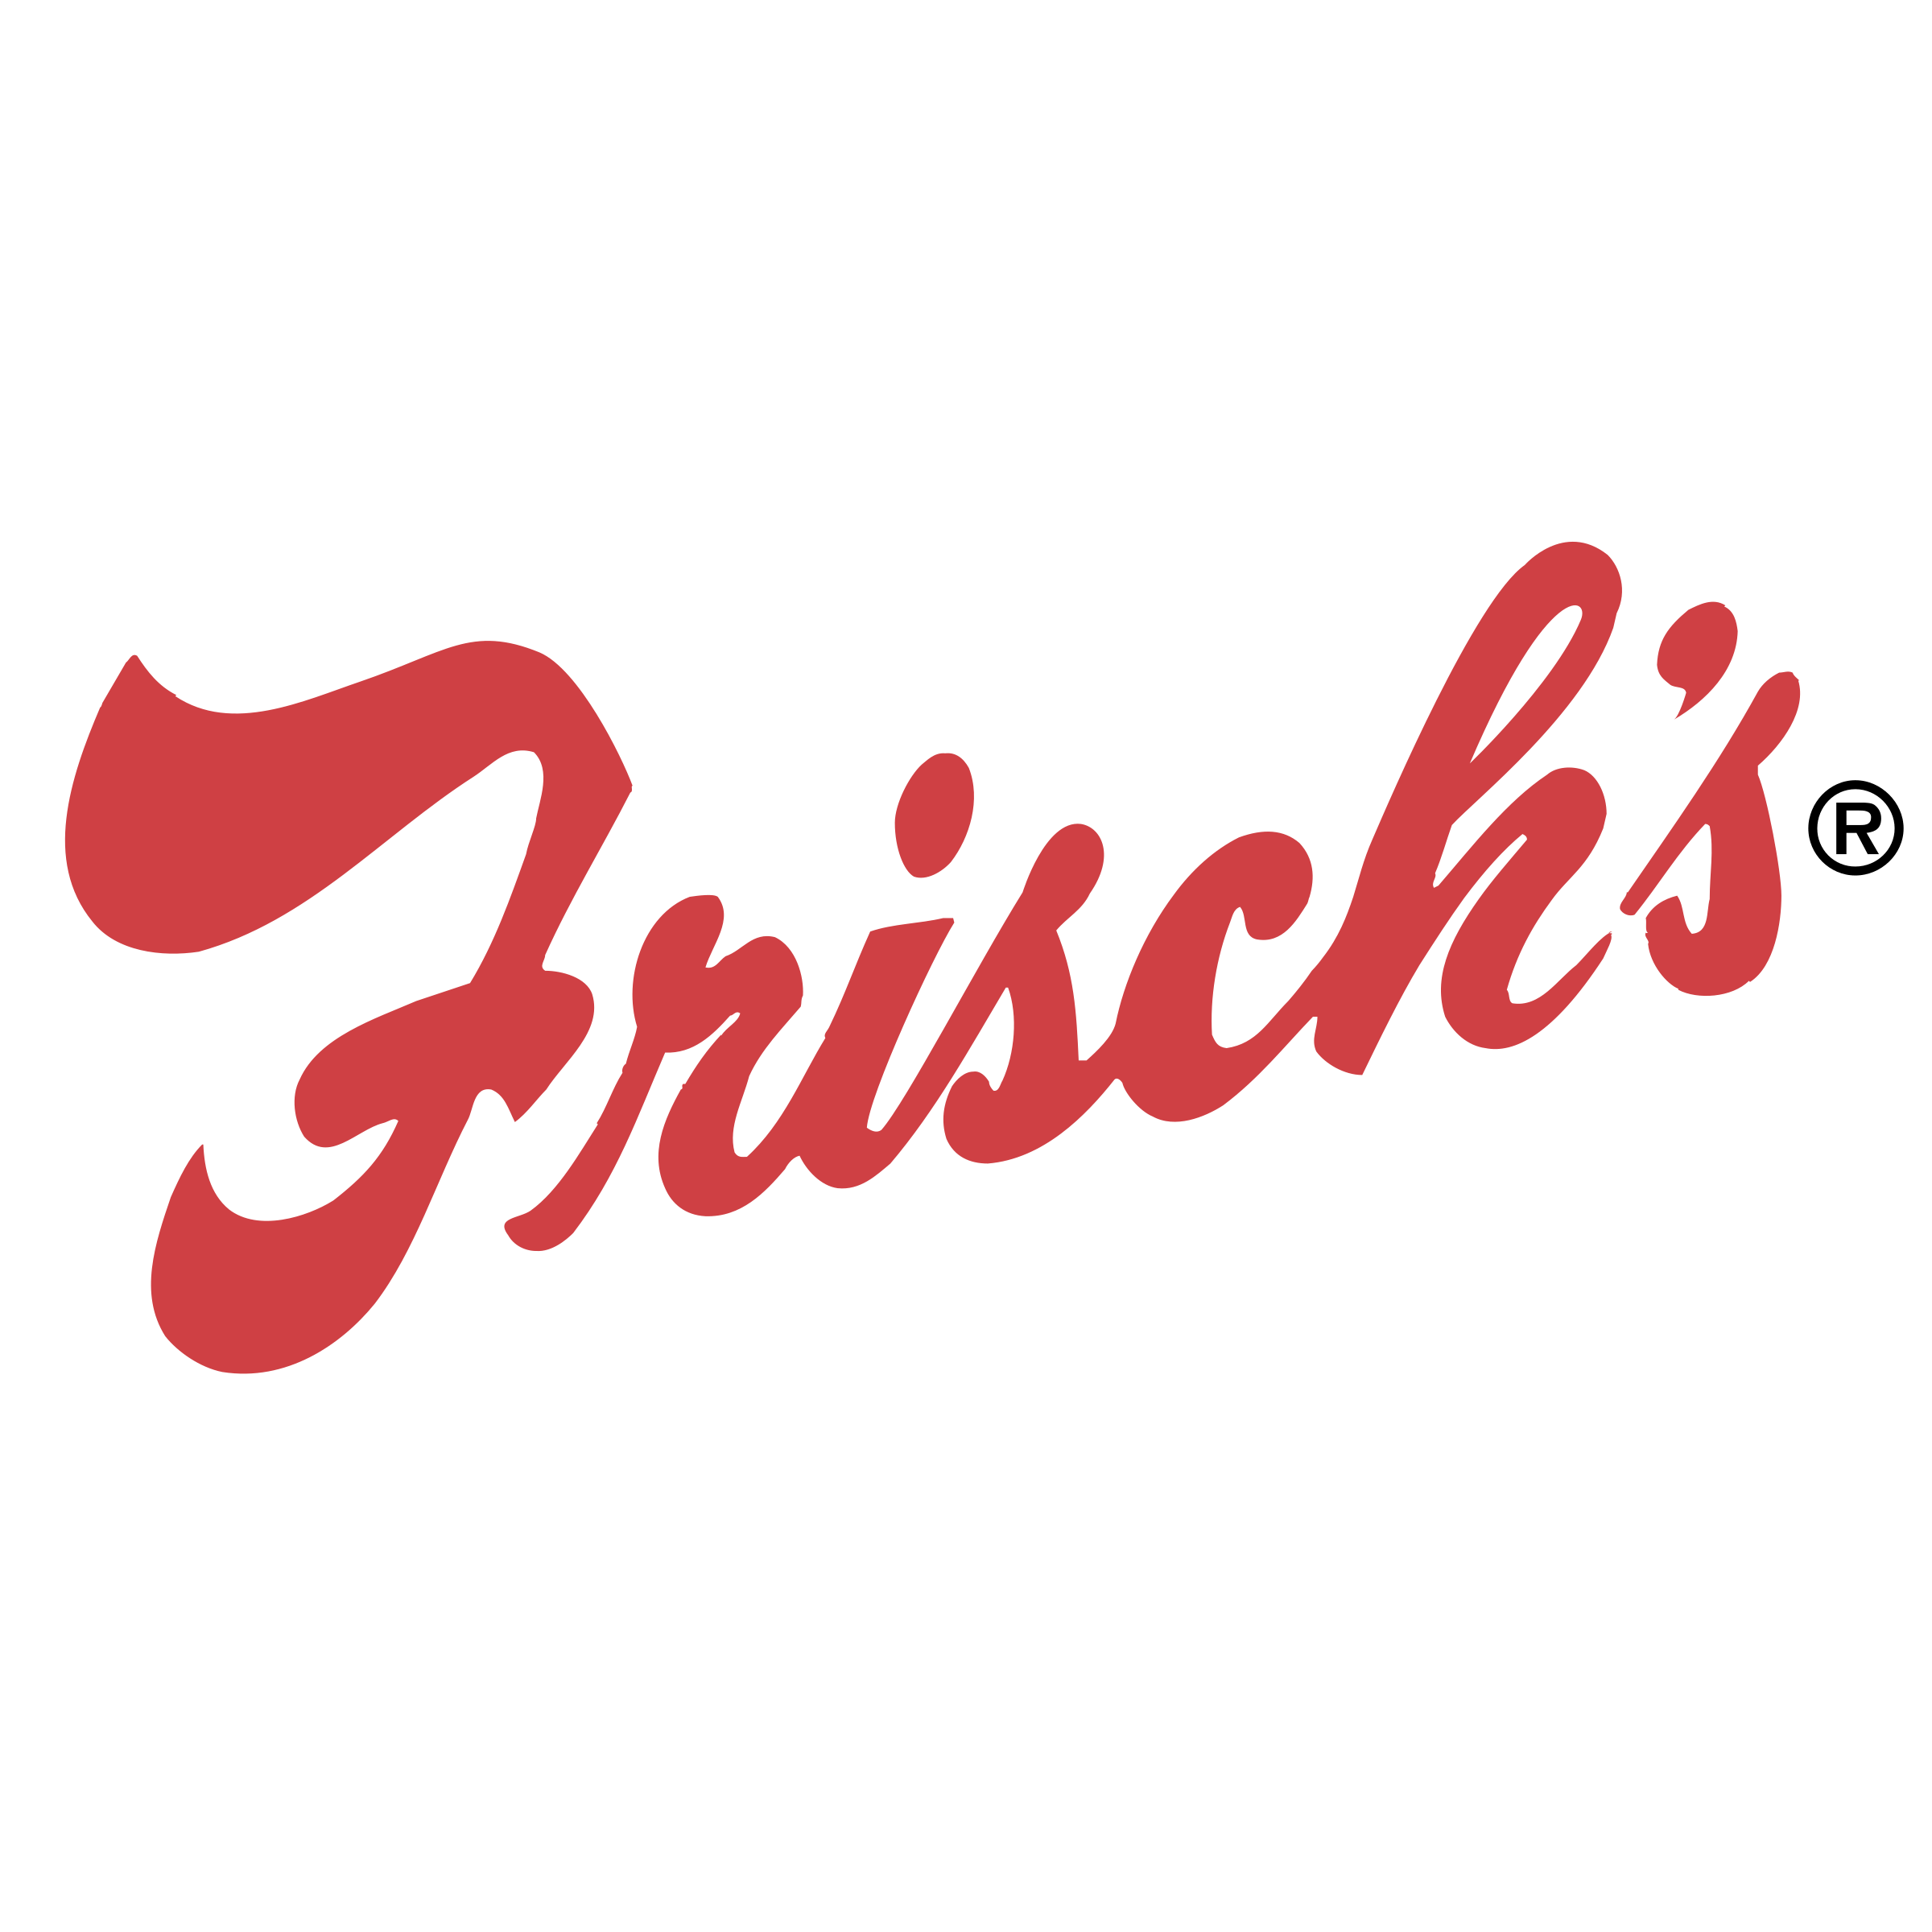 Freshes Restaurant Logo - Frisch's Restaurants Logo PNG Transparent & SVG Vector - Freebie Supply